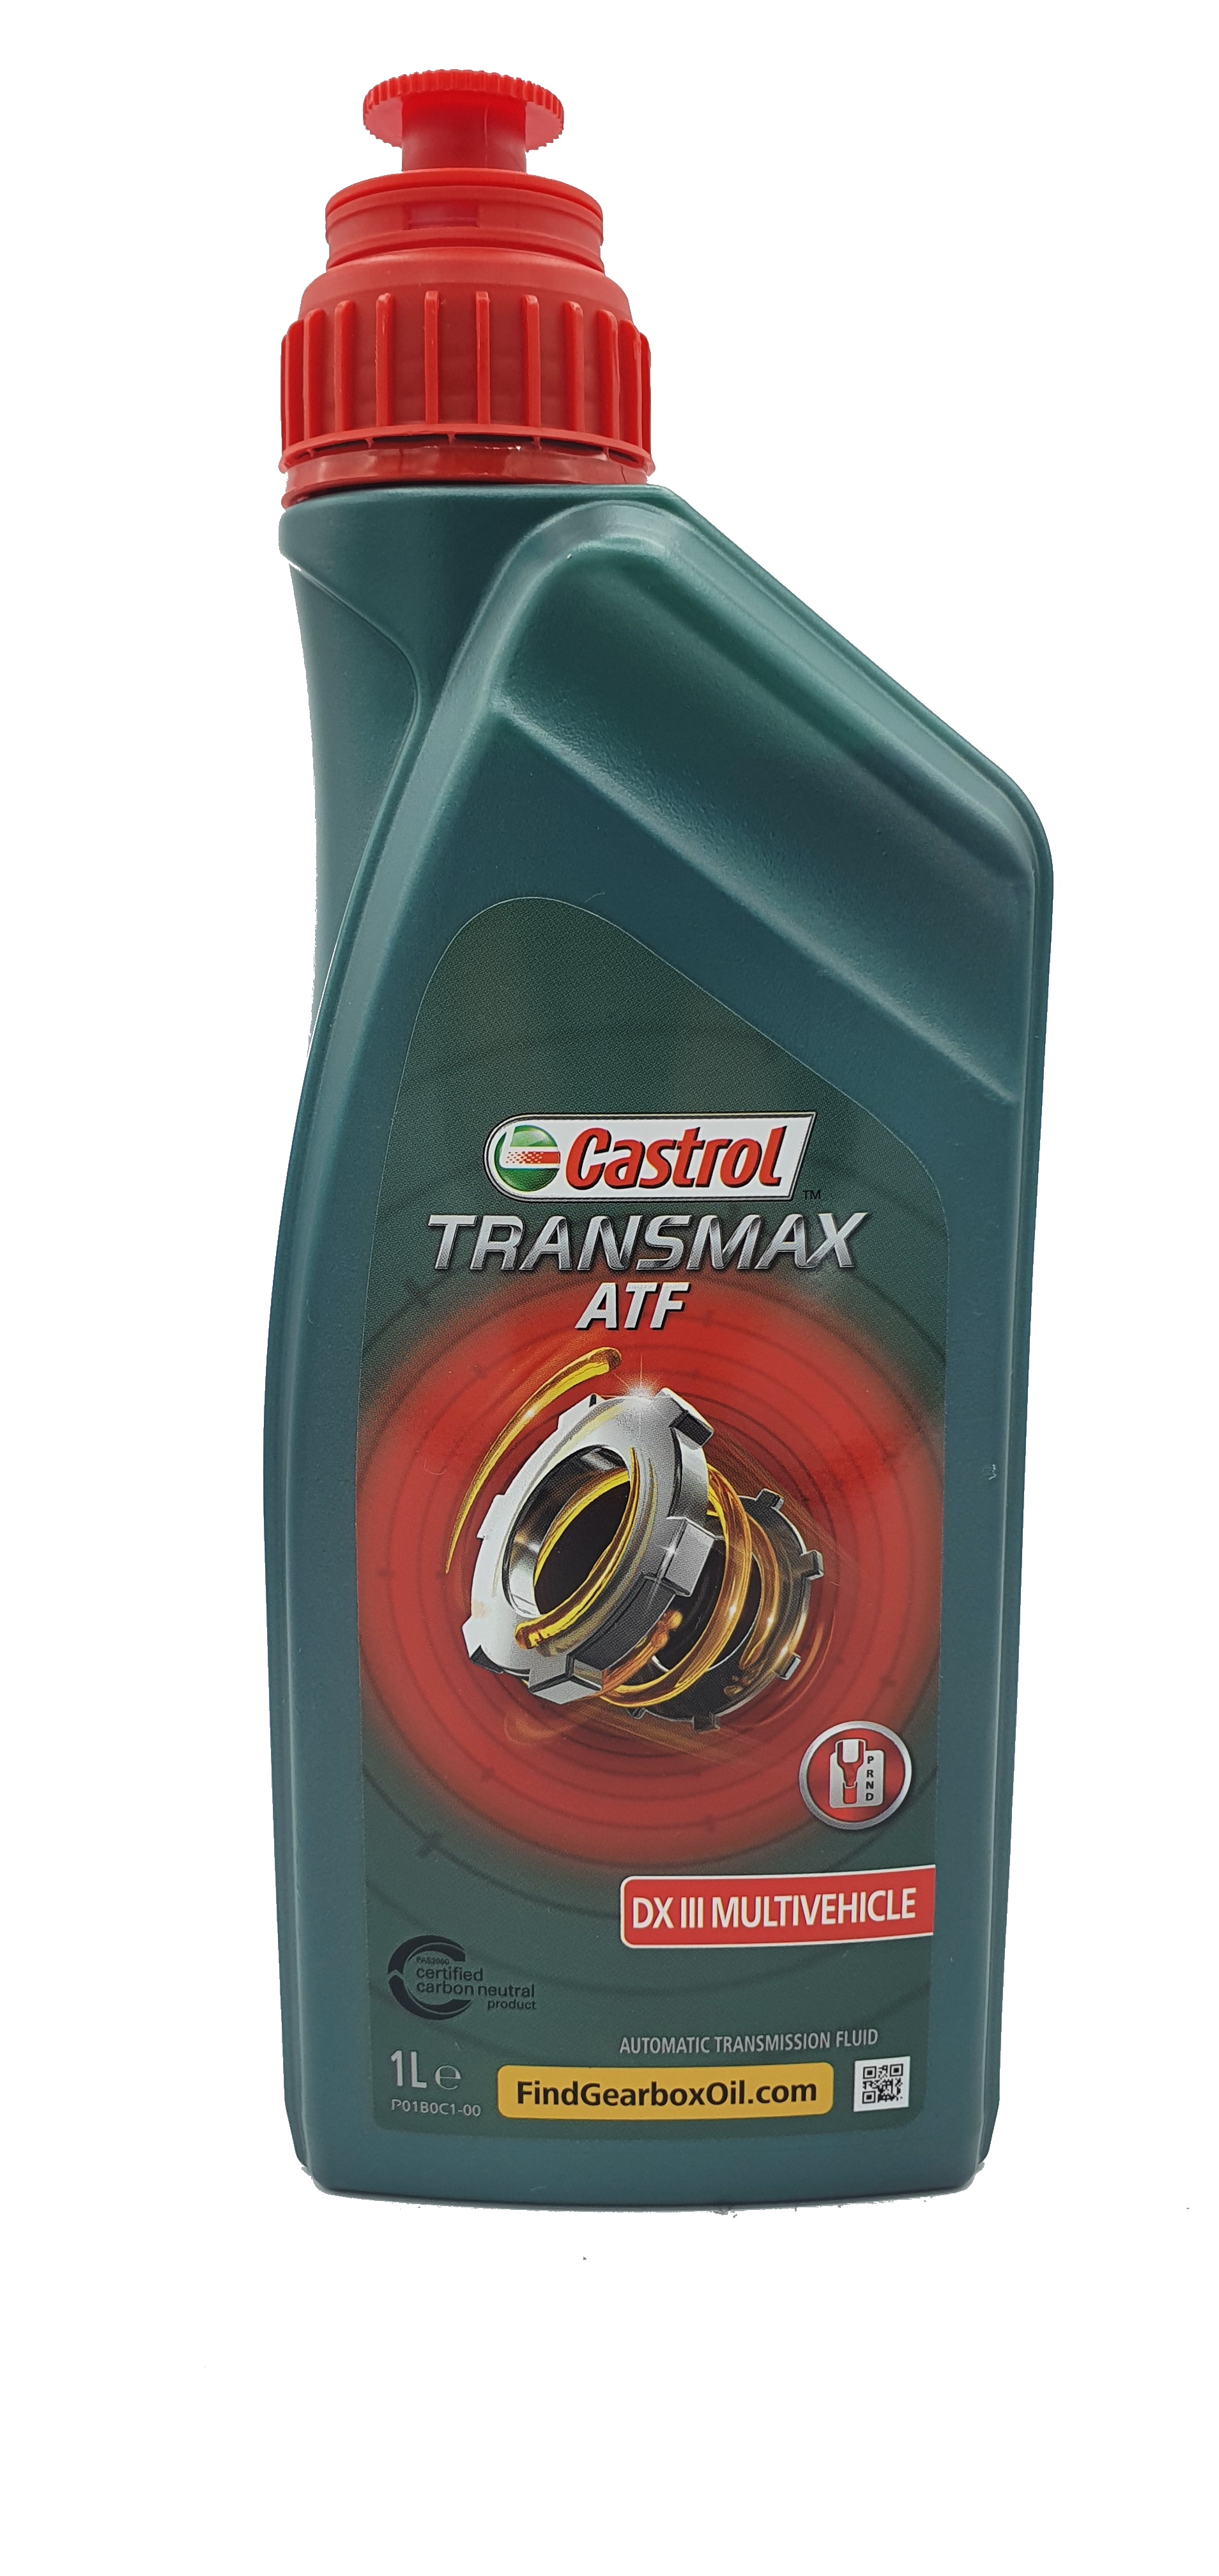 Castrol Transmax ATF DX III Multivehicle 8x1 Liter